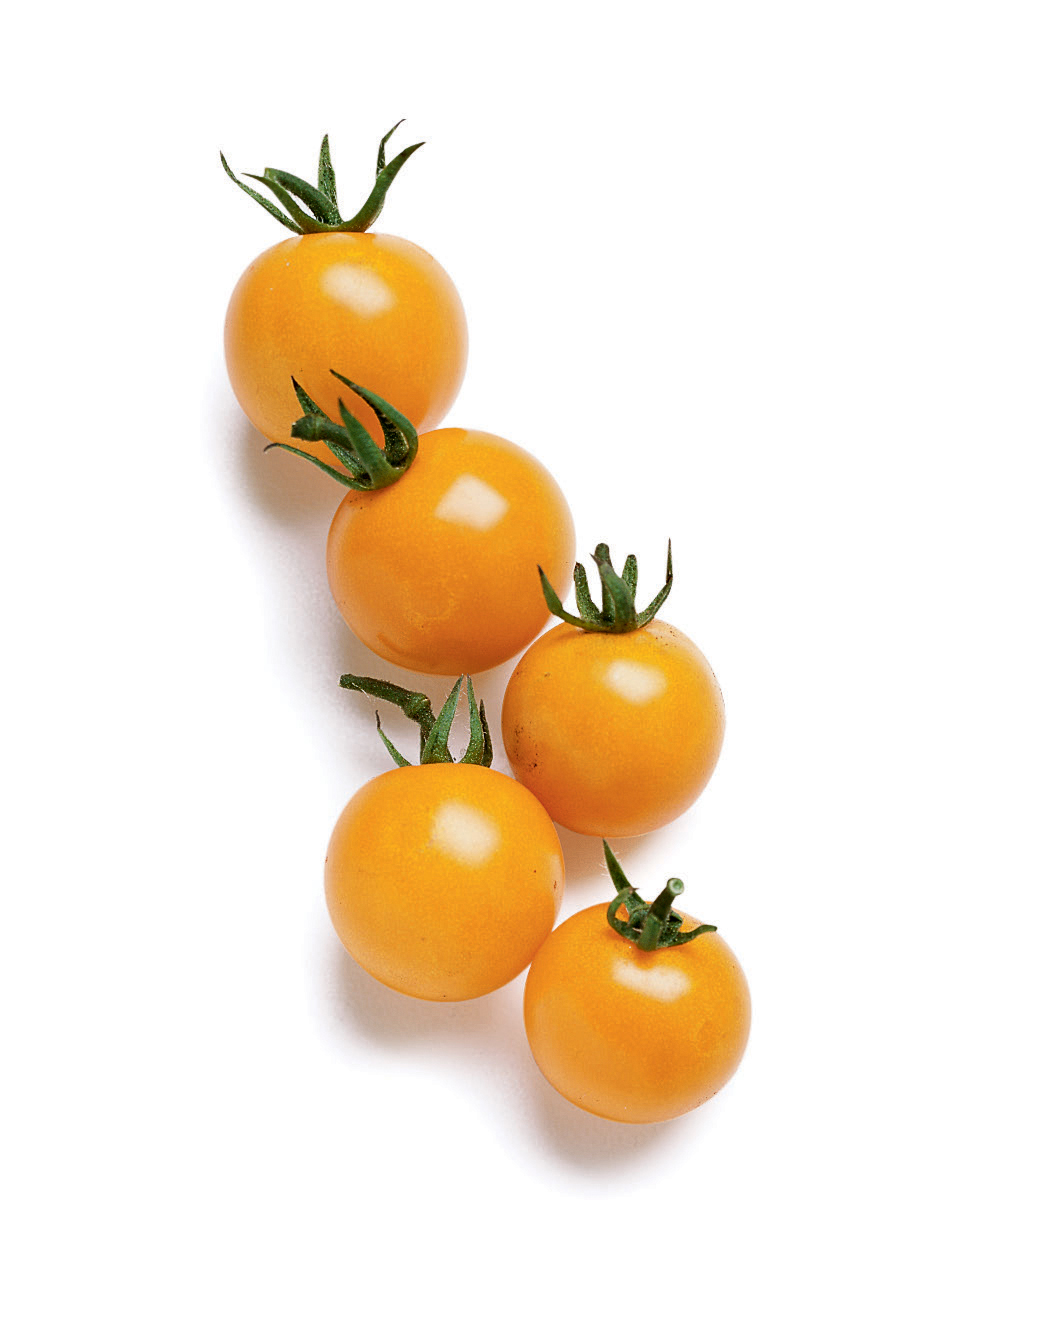 5 Best Cherry Tomatoes